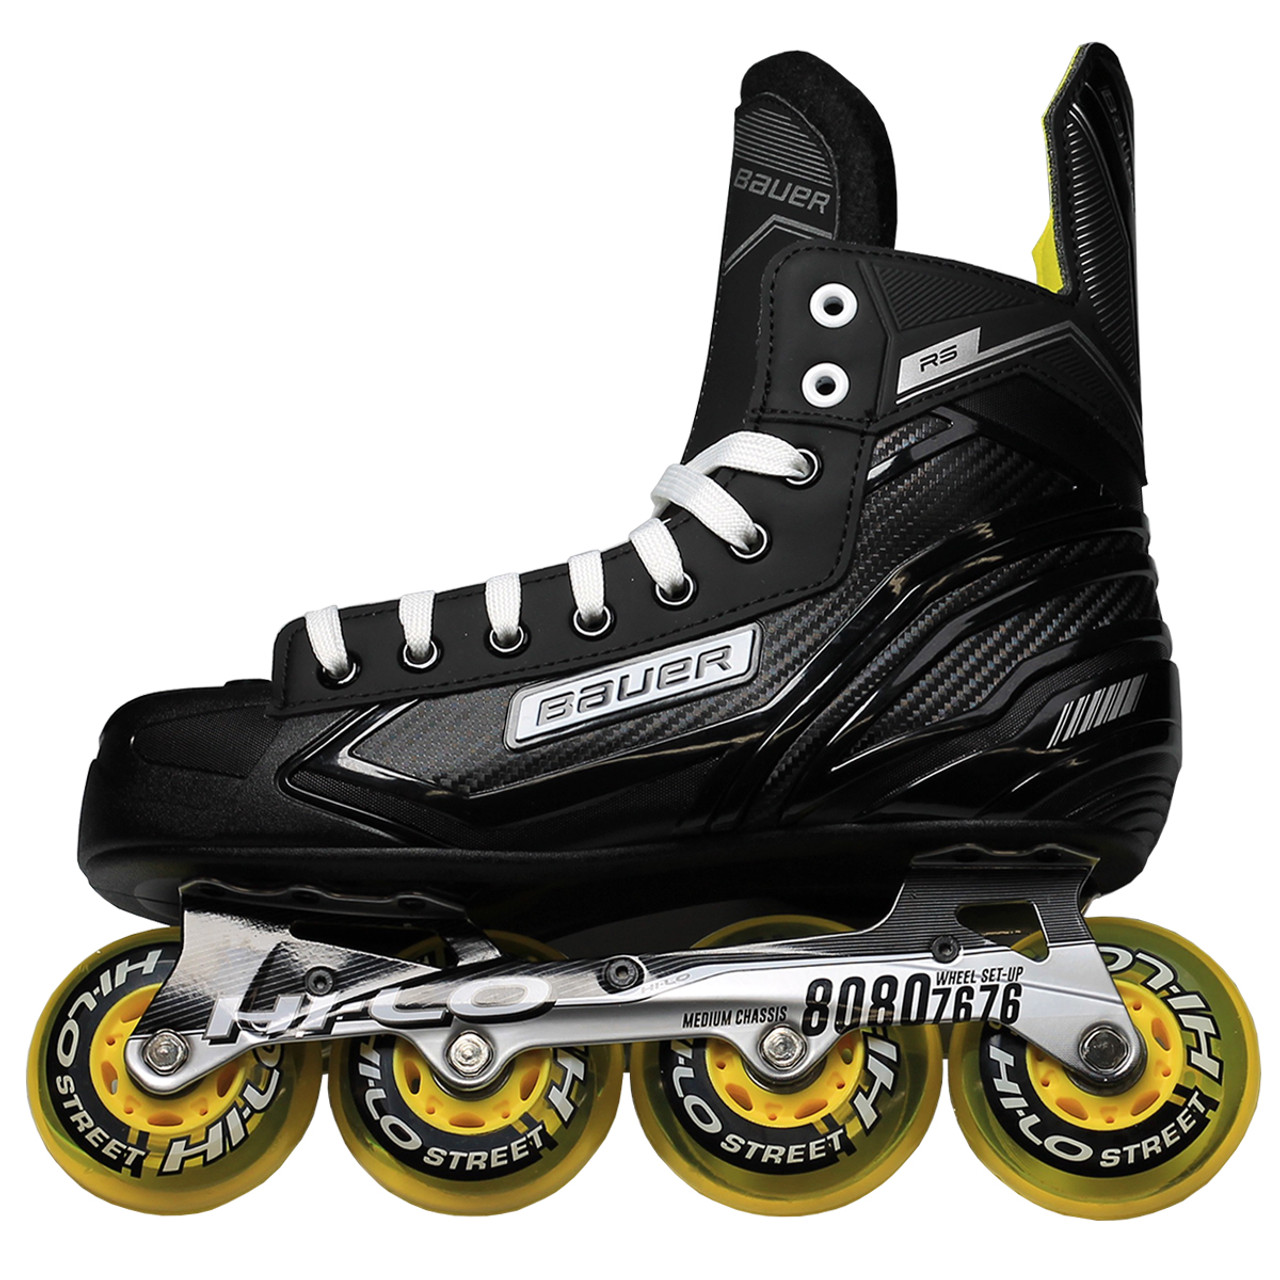 Kolonel Inspireren Het kantoor Bauer RS Senior Inline / Roller Hockey Skates - Black, Yellow